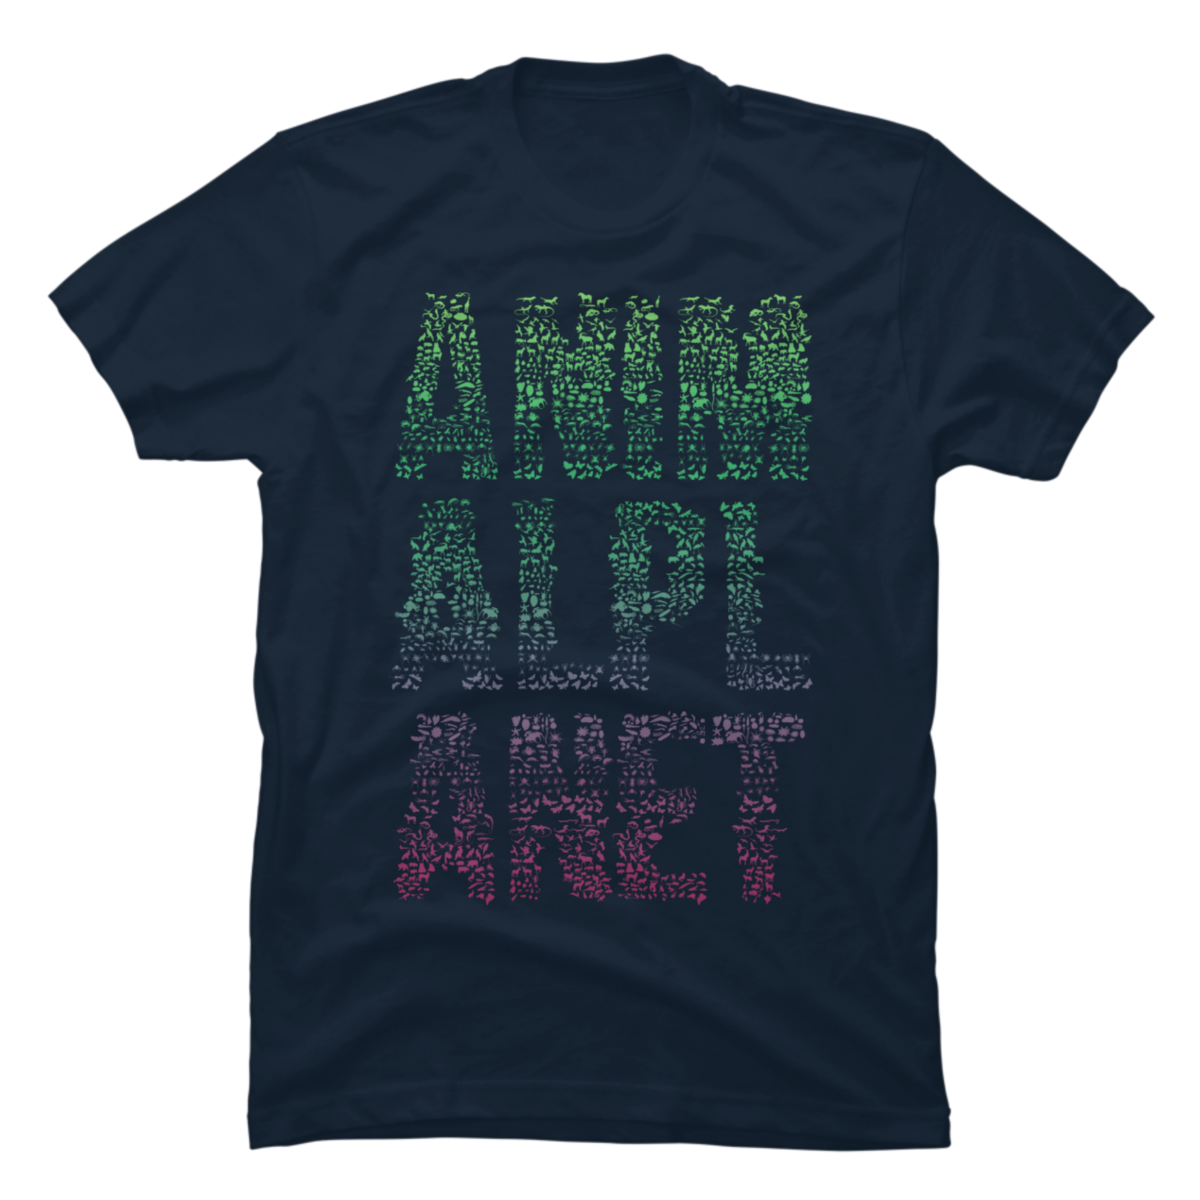 animal planet shirt